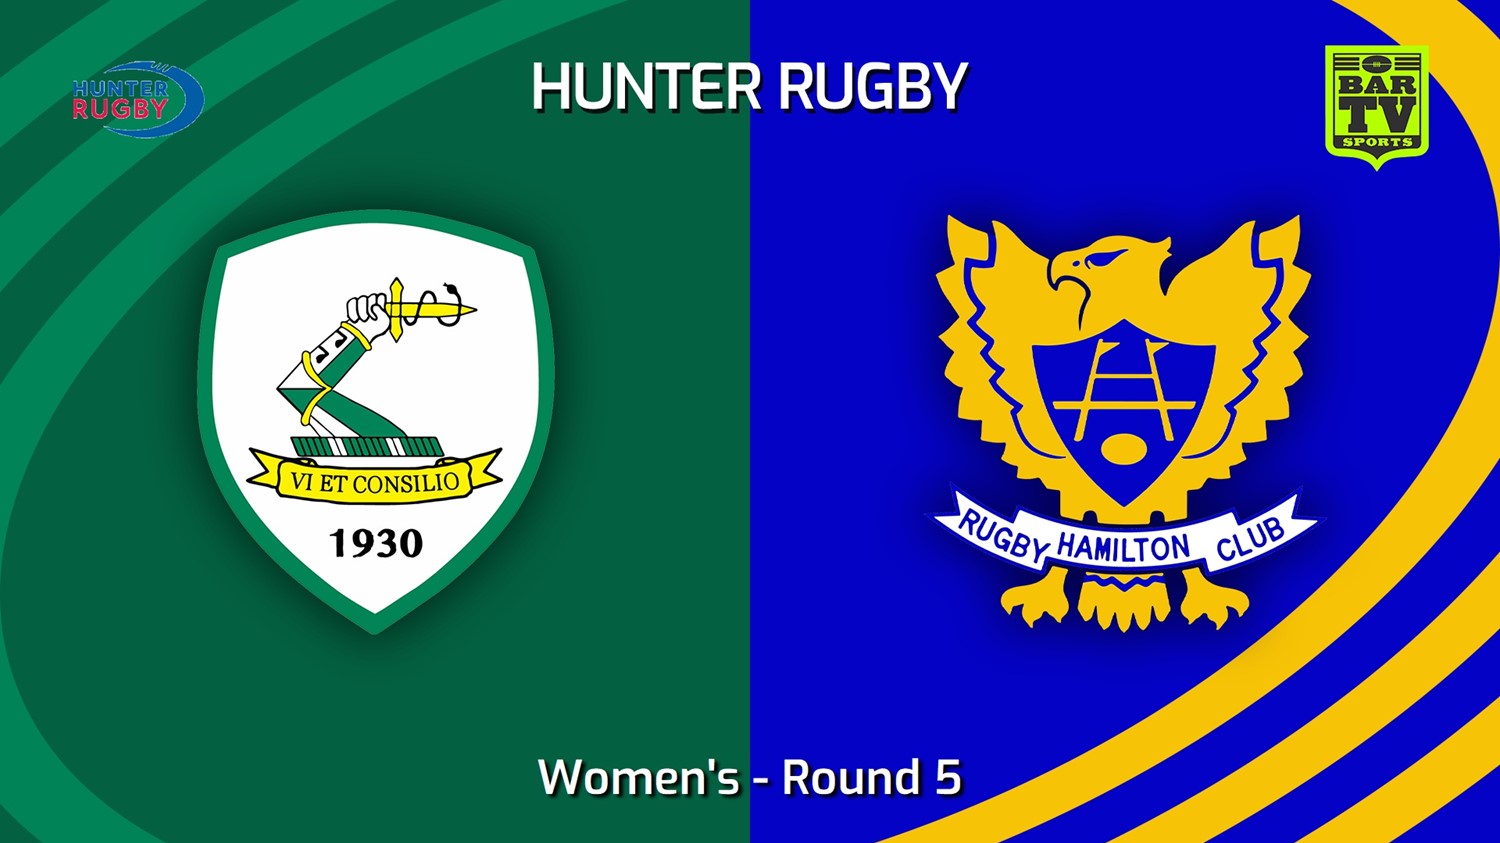 230513-Hunter Rugby Round 5 - Women's - Merewether Carlton v Hamilton Hawks Minigame Slate Image